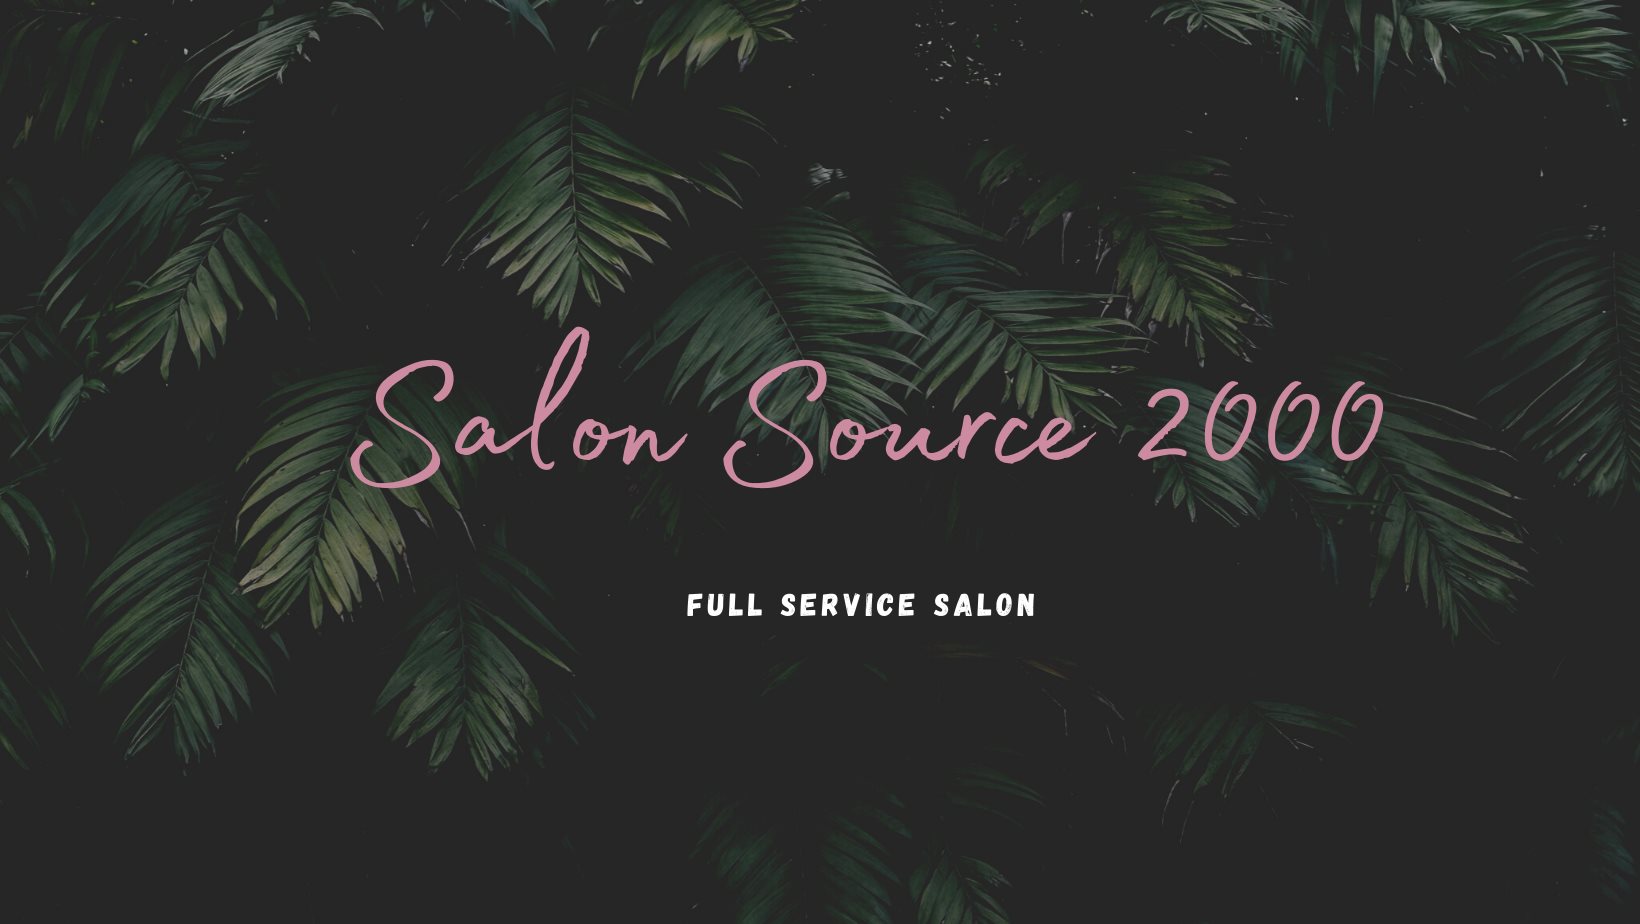 Salon Source 2000